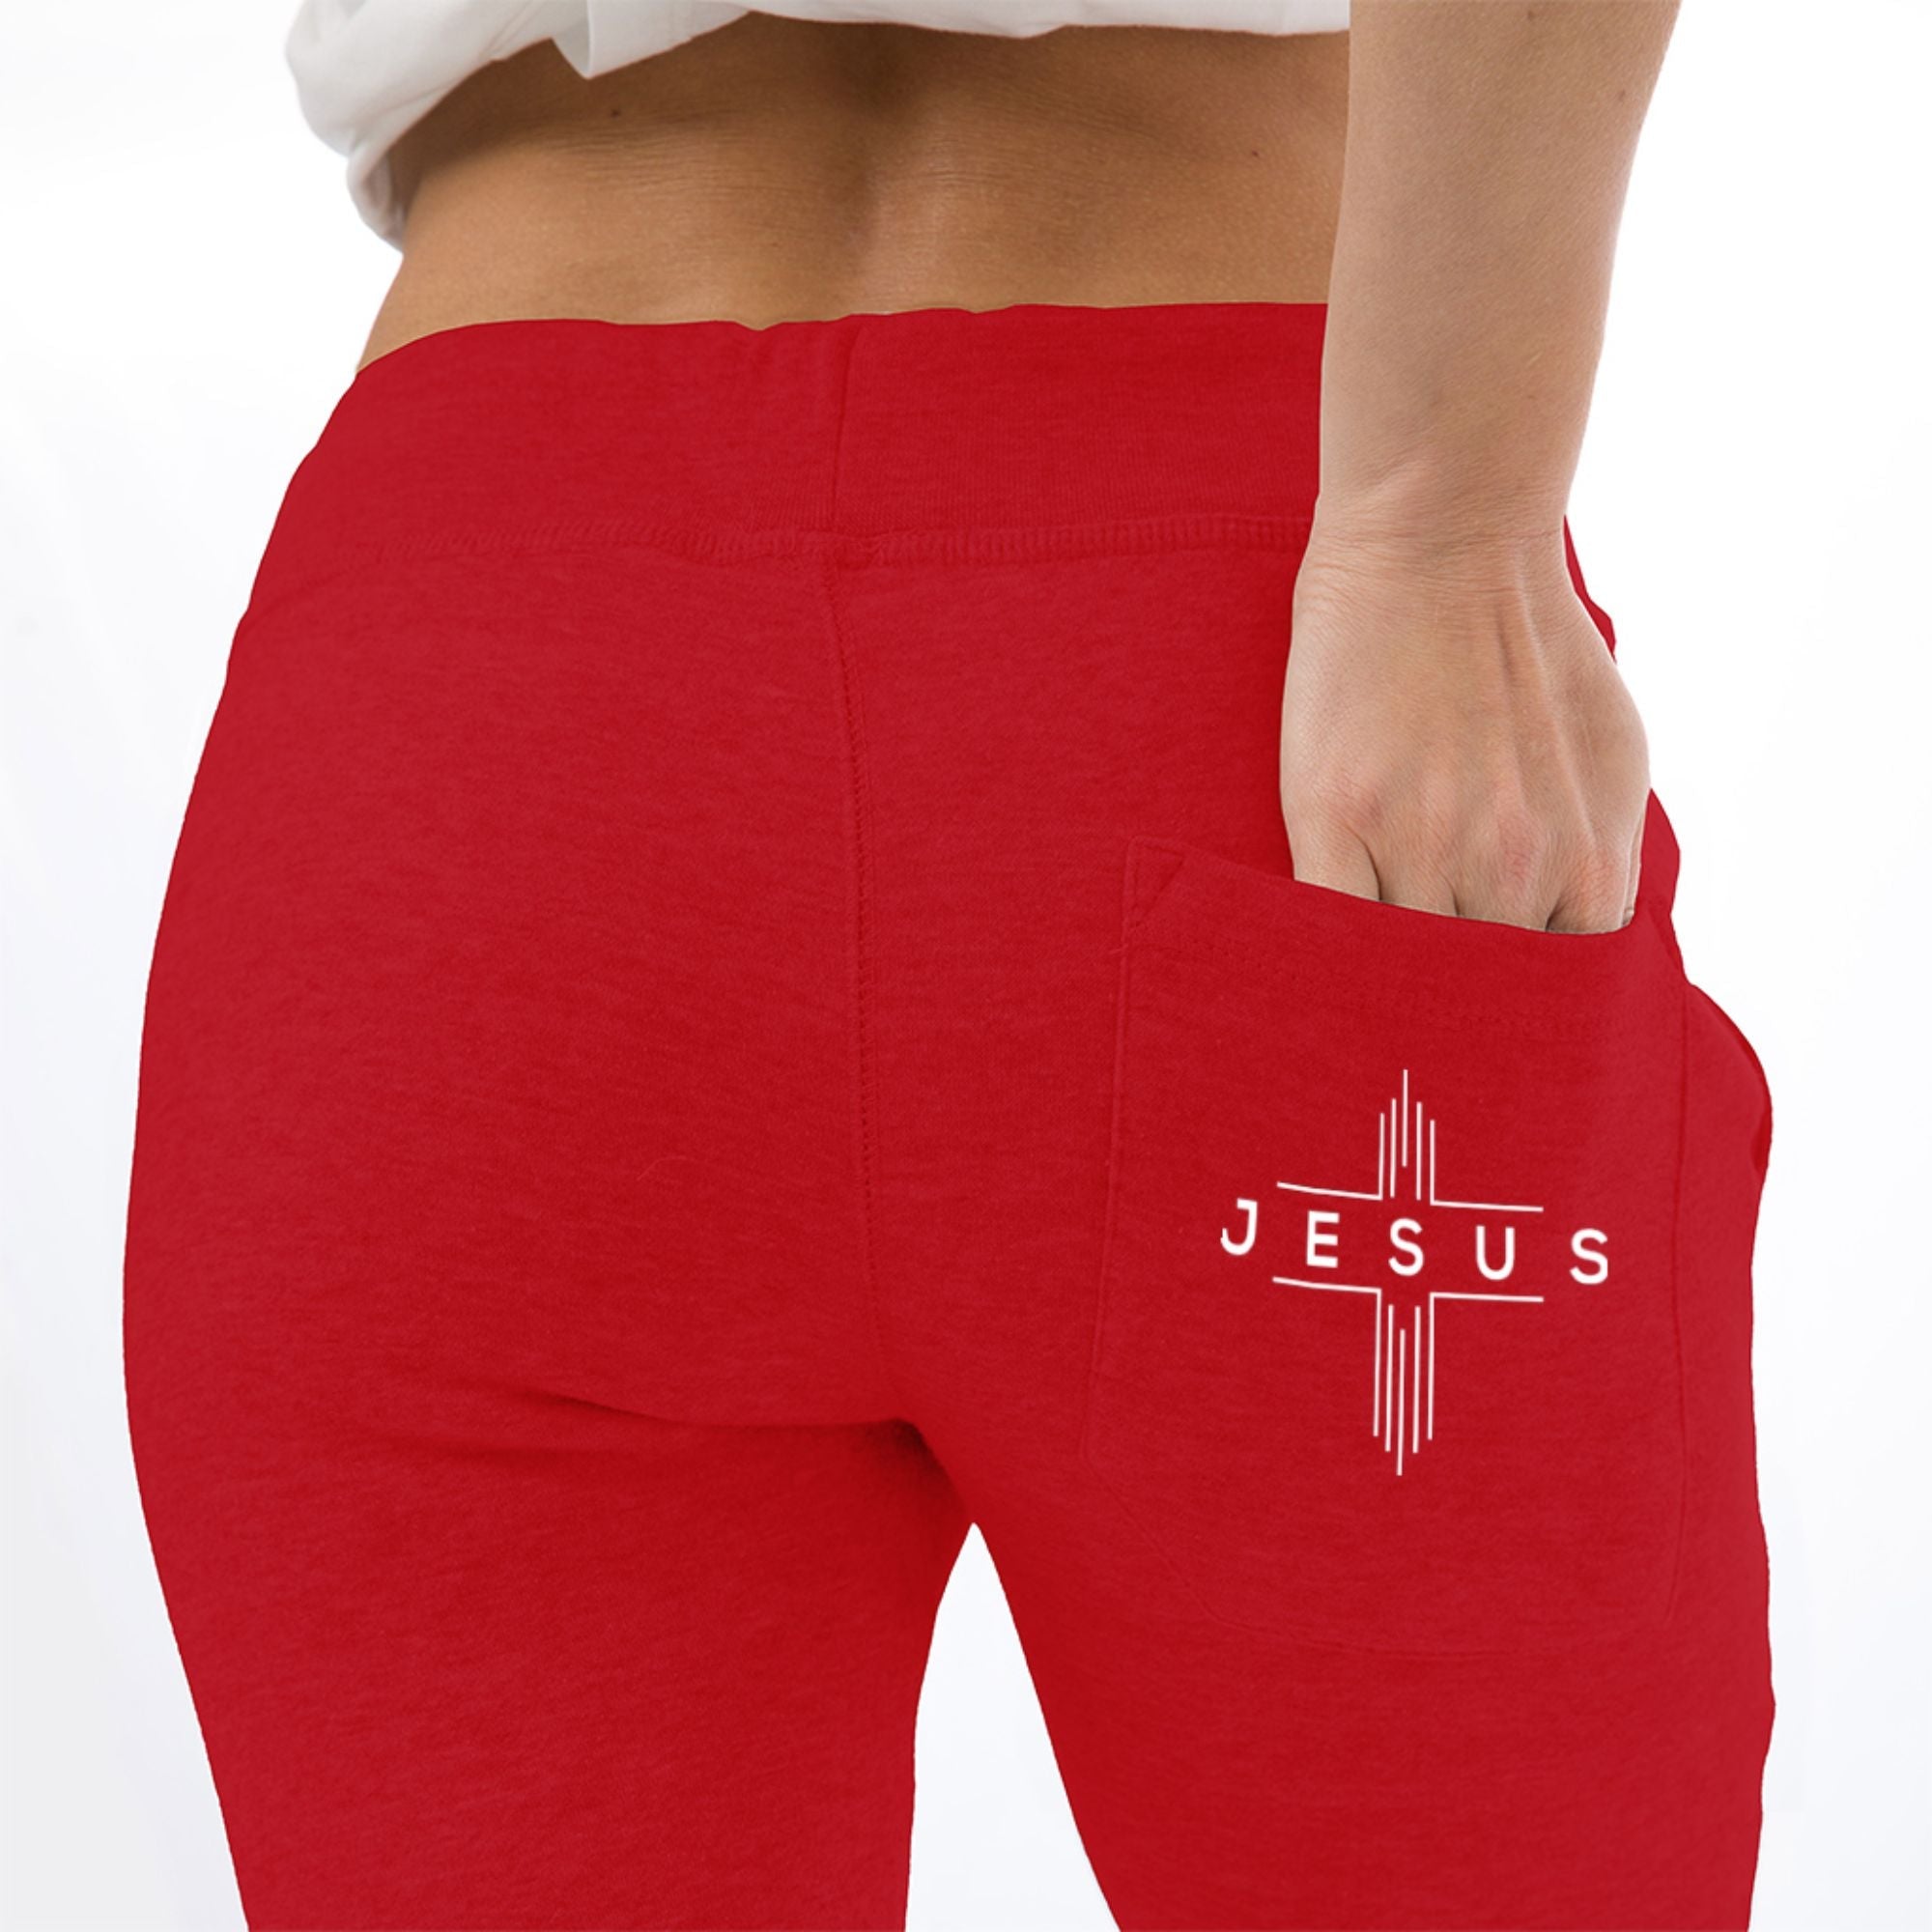 Jesus Cheveron Cross Women's Unisex Premium Fleece Joggers - Black / Red - Matching Champion T-shirt Available Size: S Color: Red Jesus Passion Apparel